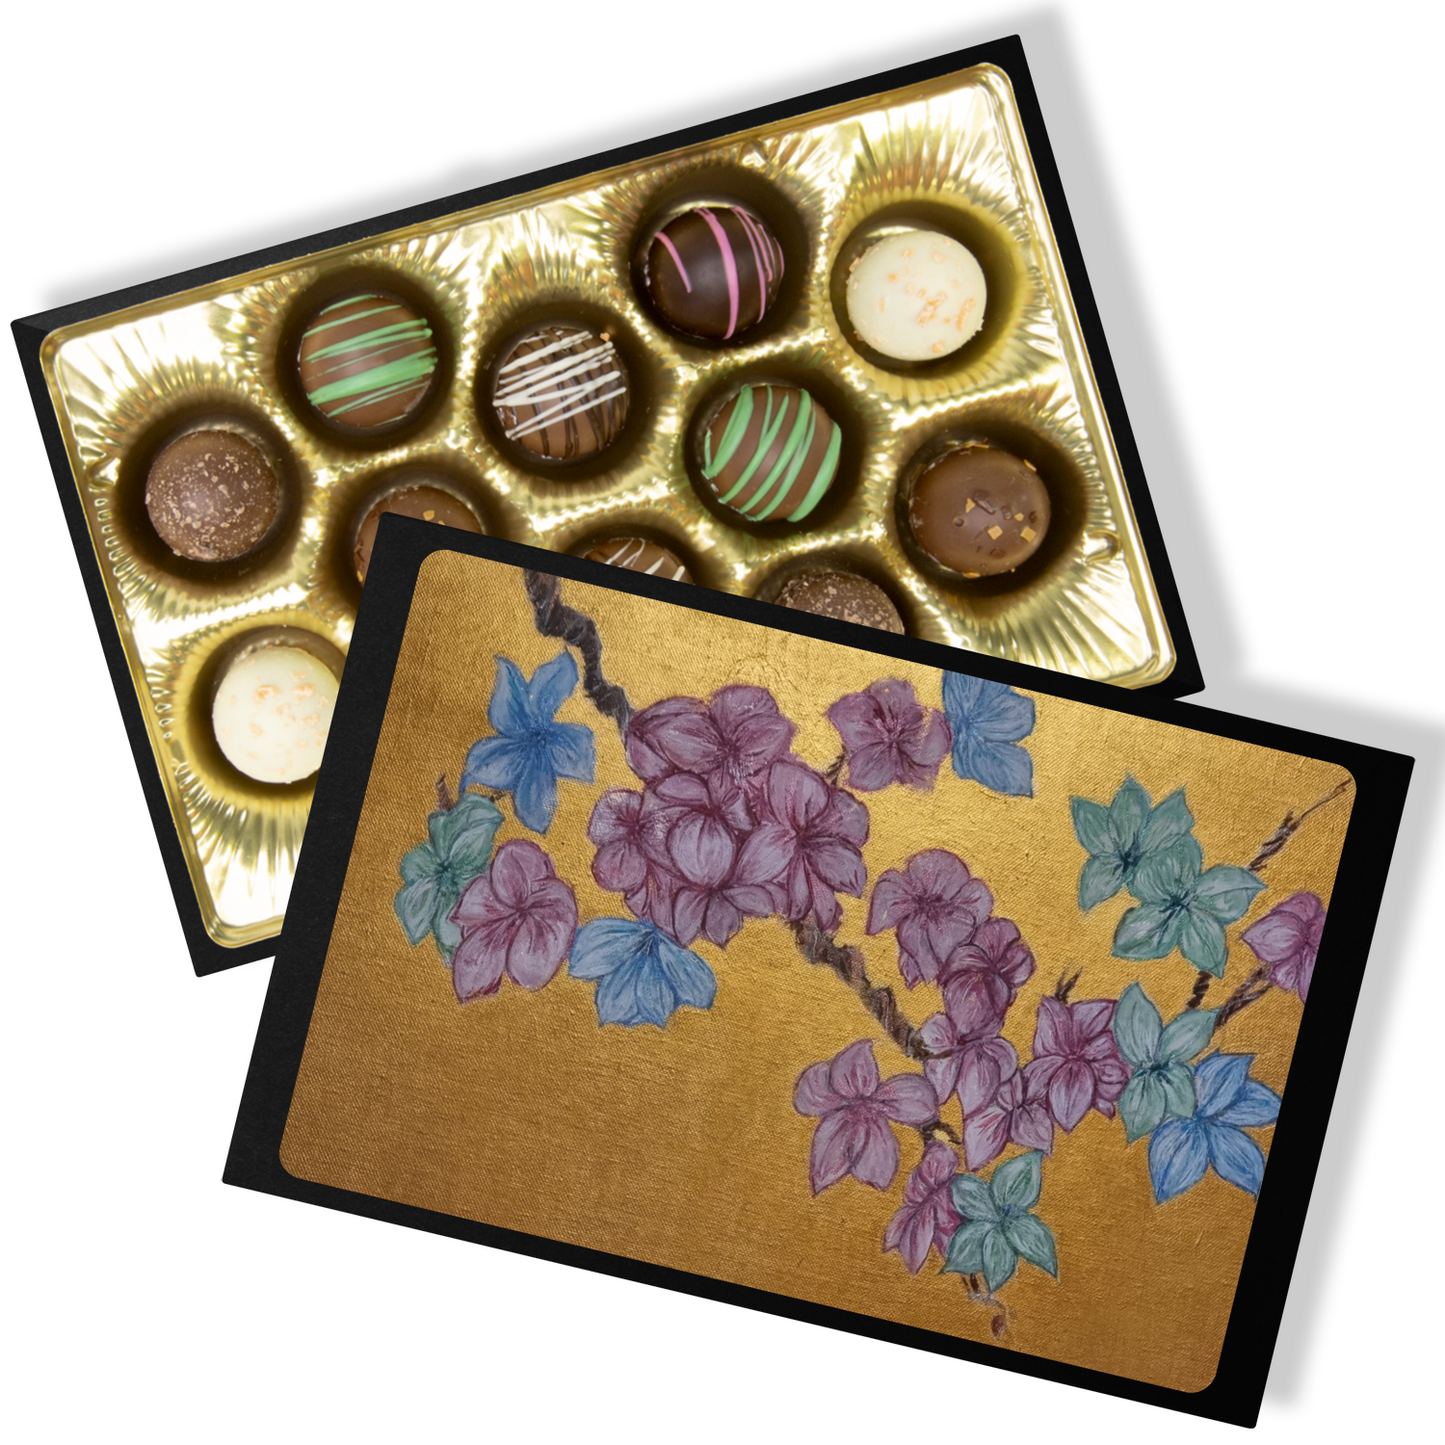 Handmade Chocolate Truffles in "3 Colors" Box